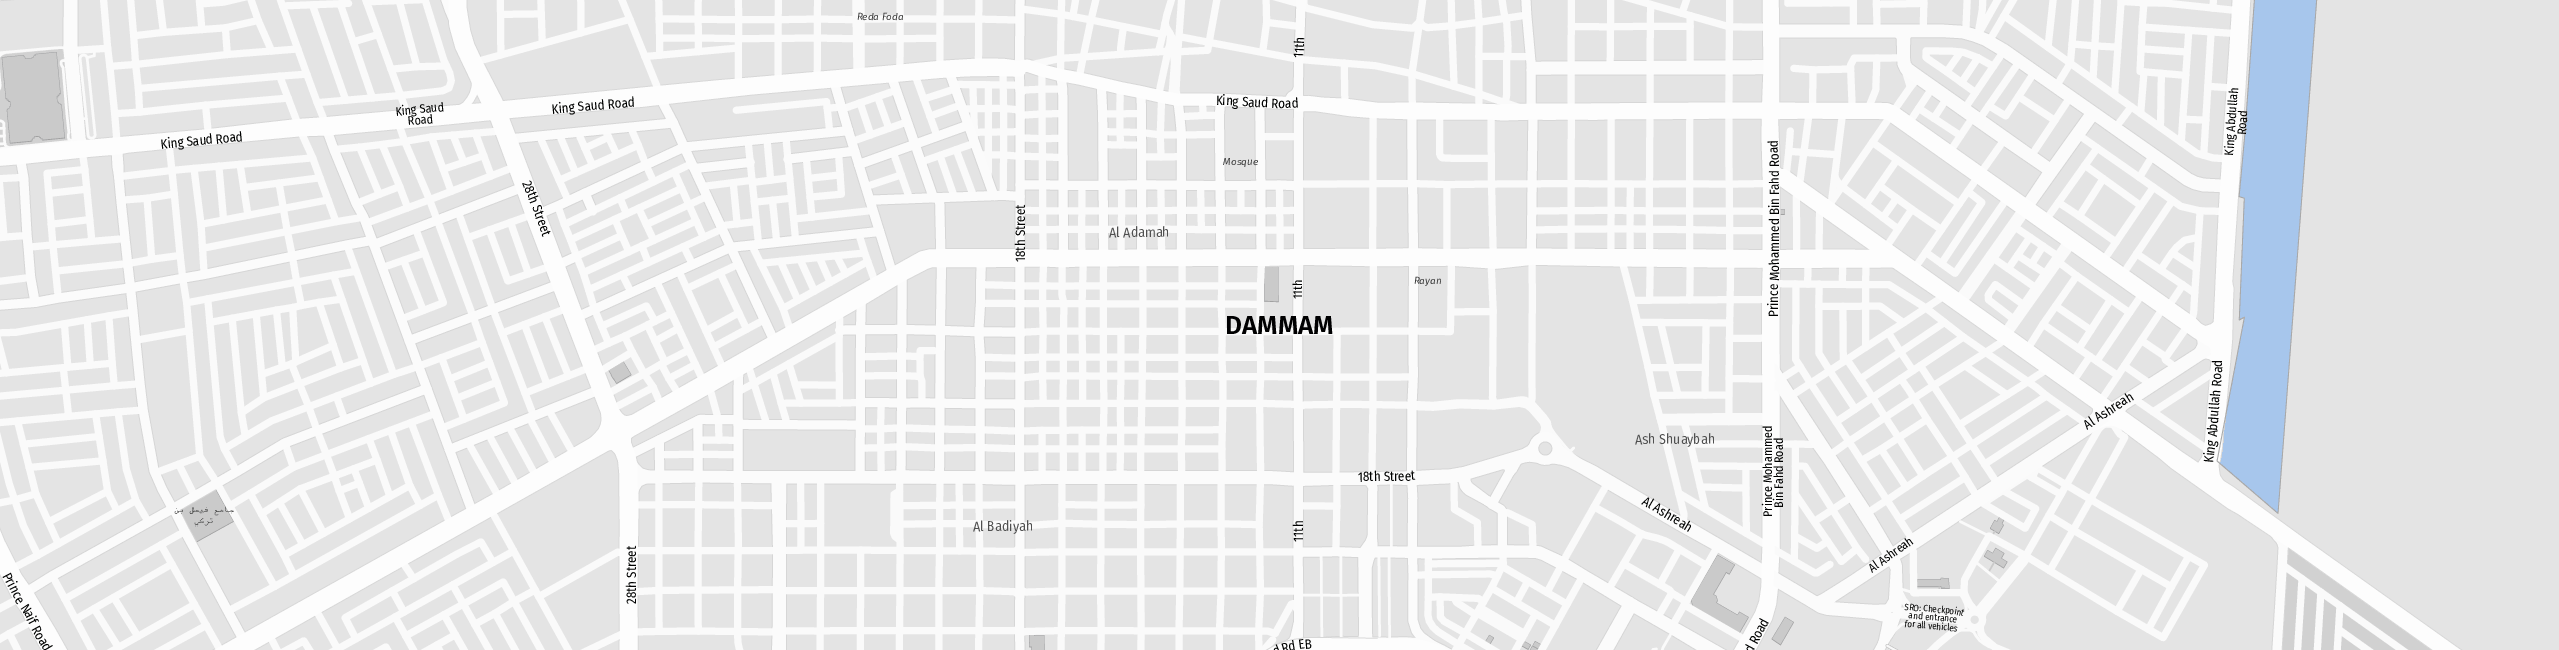 Stadtplan Ad Dammam zum Downloaden.